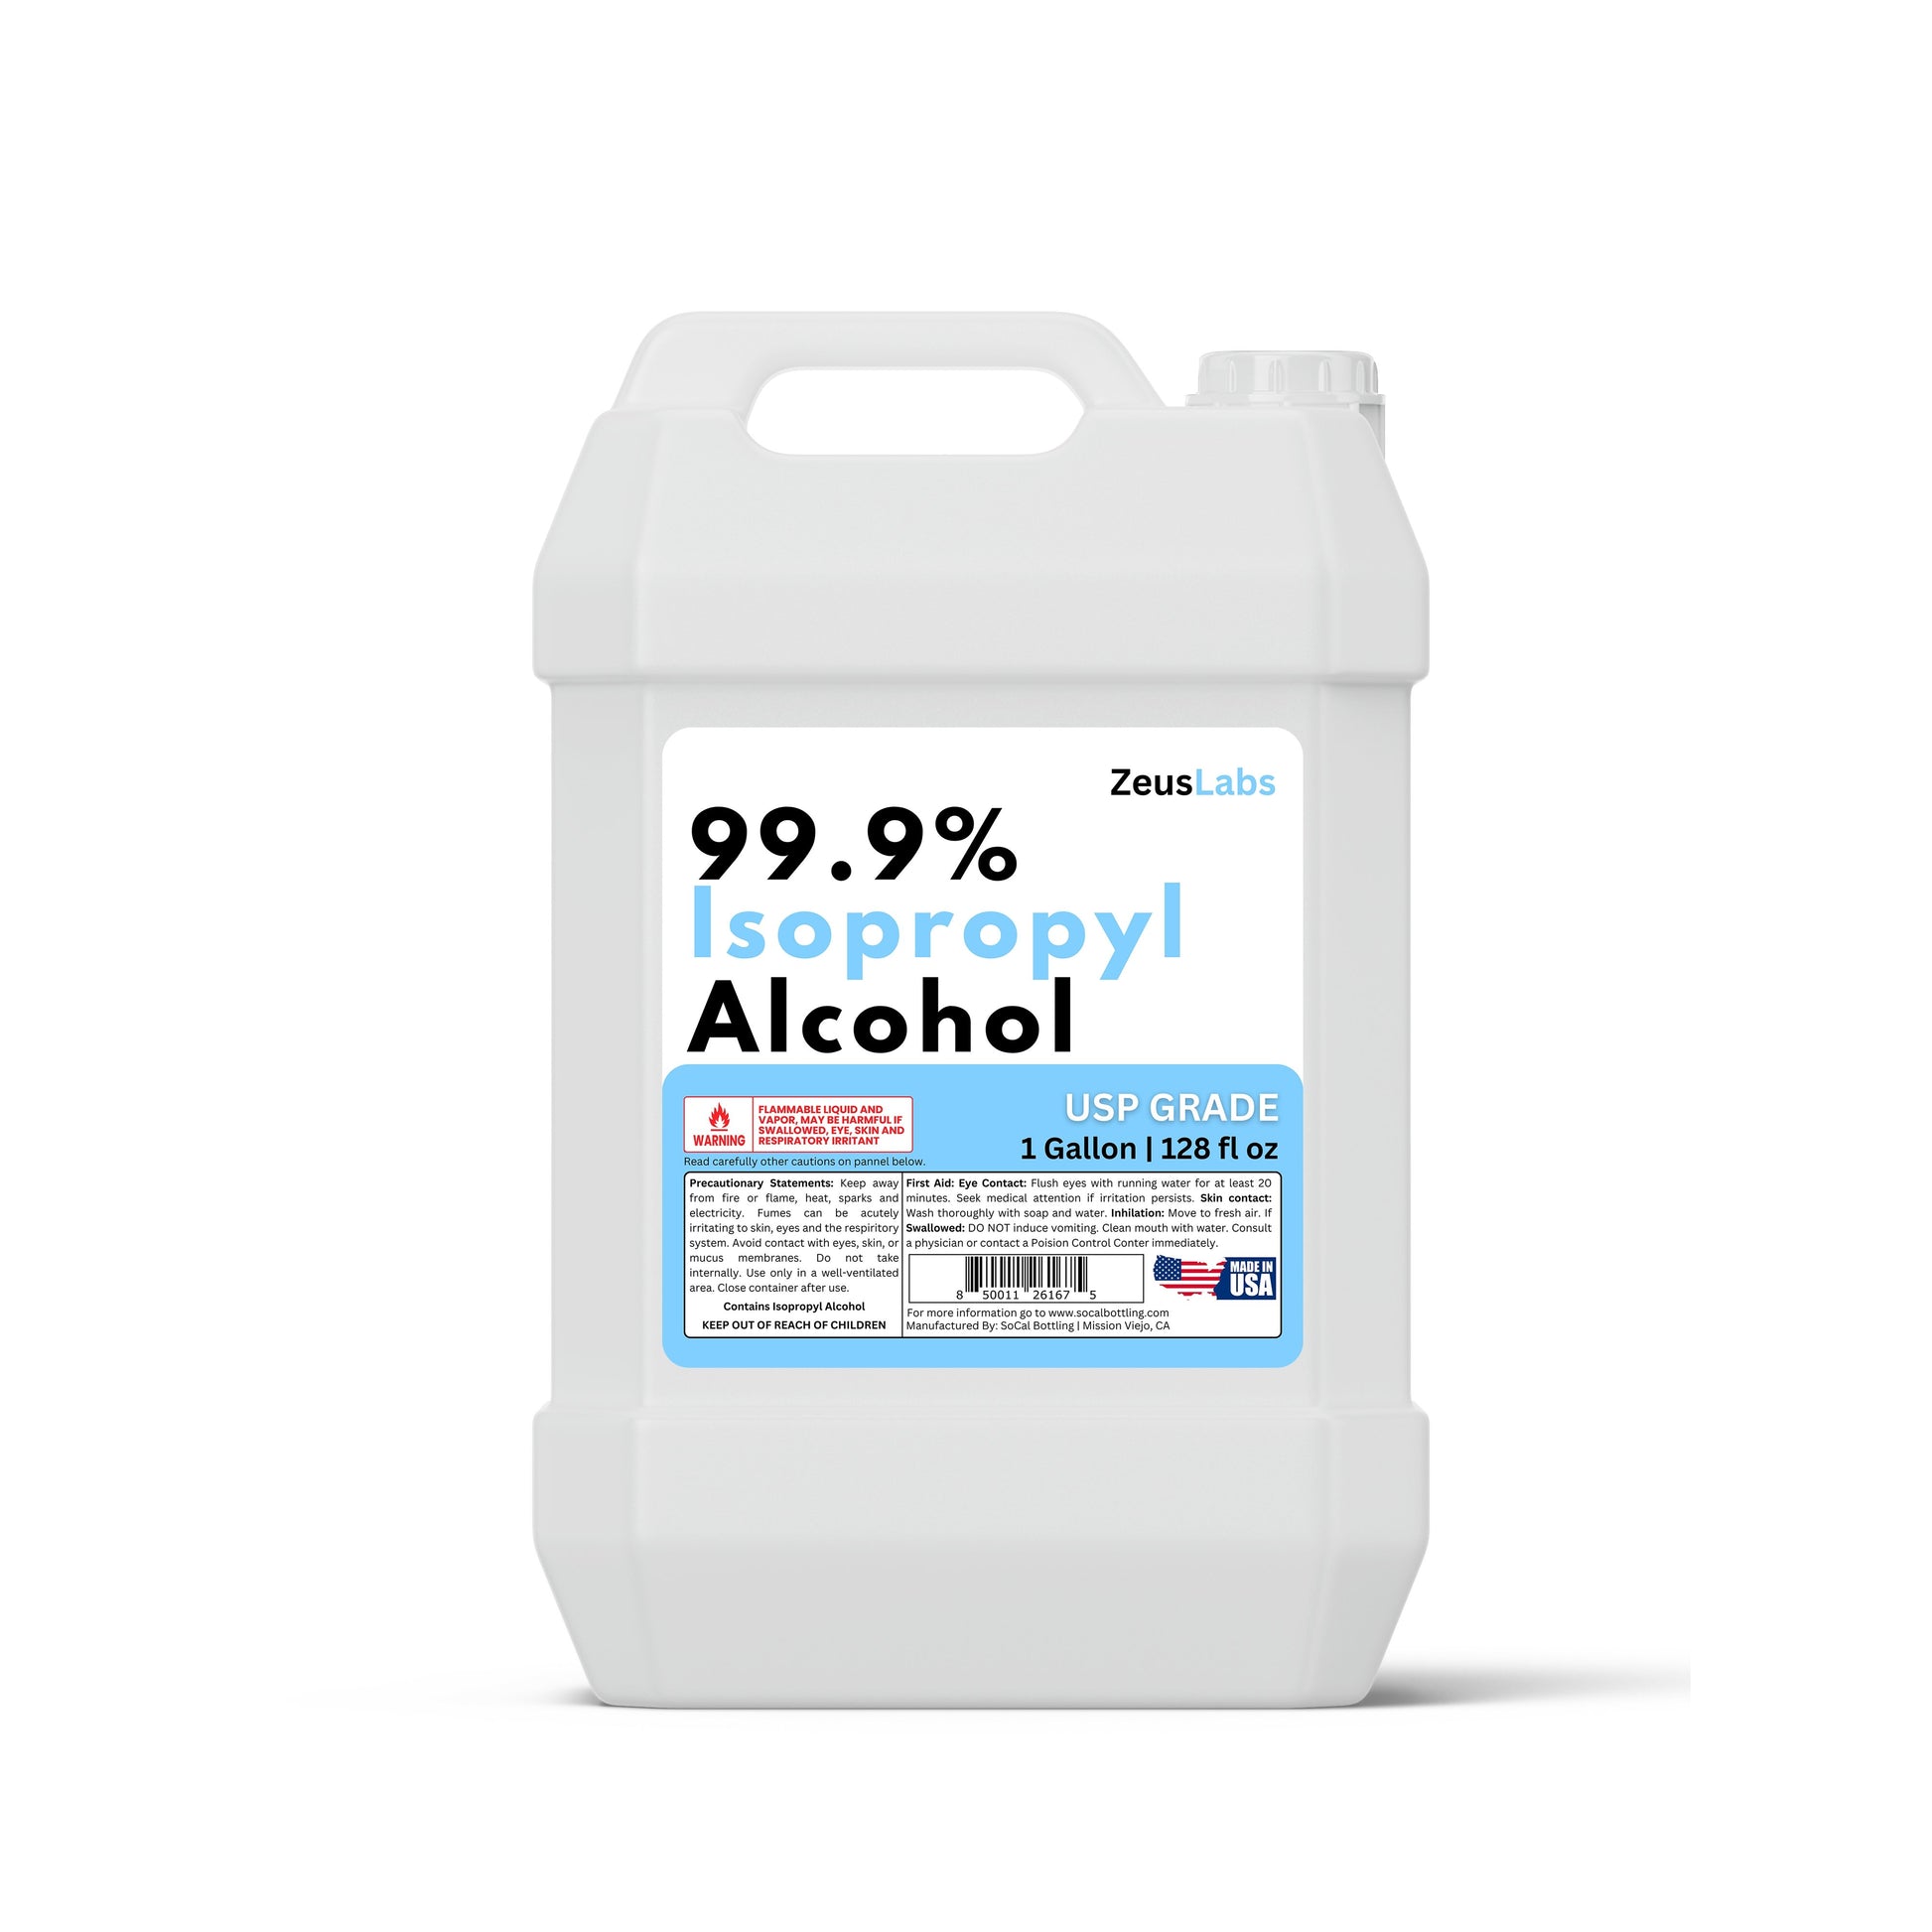 IPA Isopropyl Alcohol 99.9% PURE 250ml, 500ml, 750ml 1L 5L